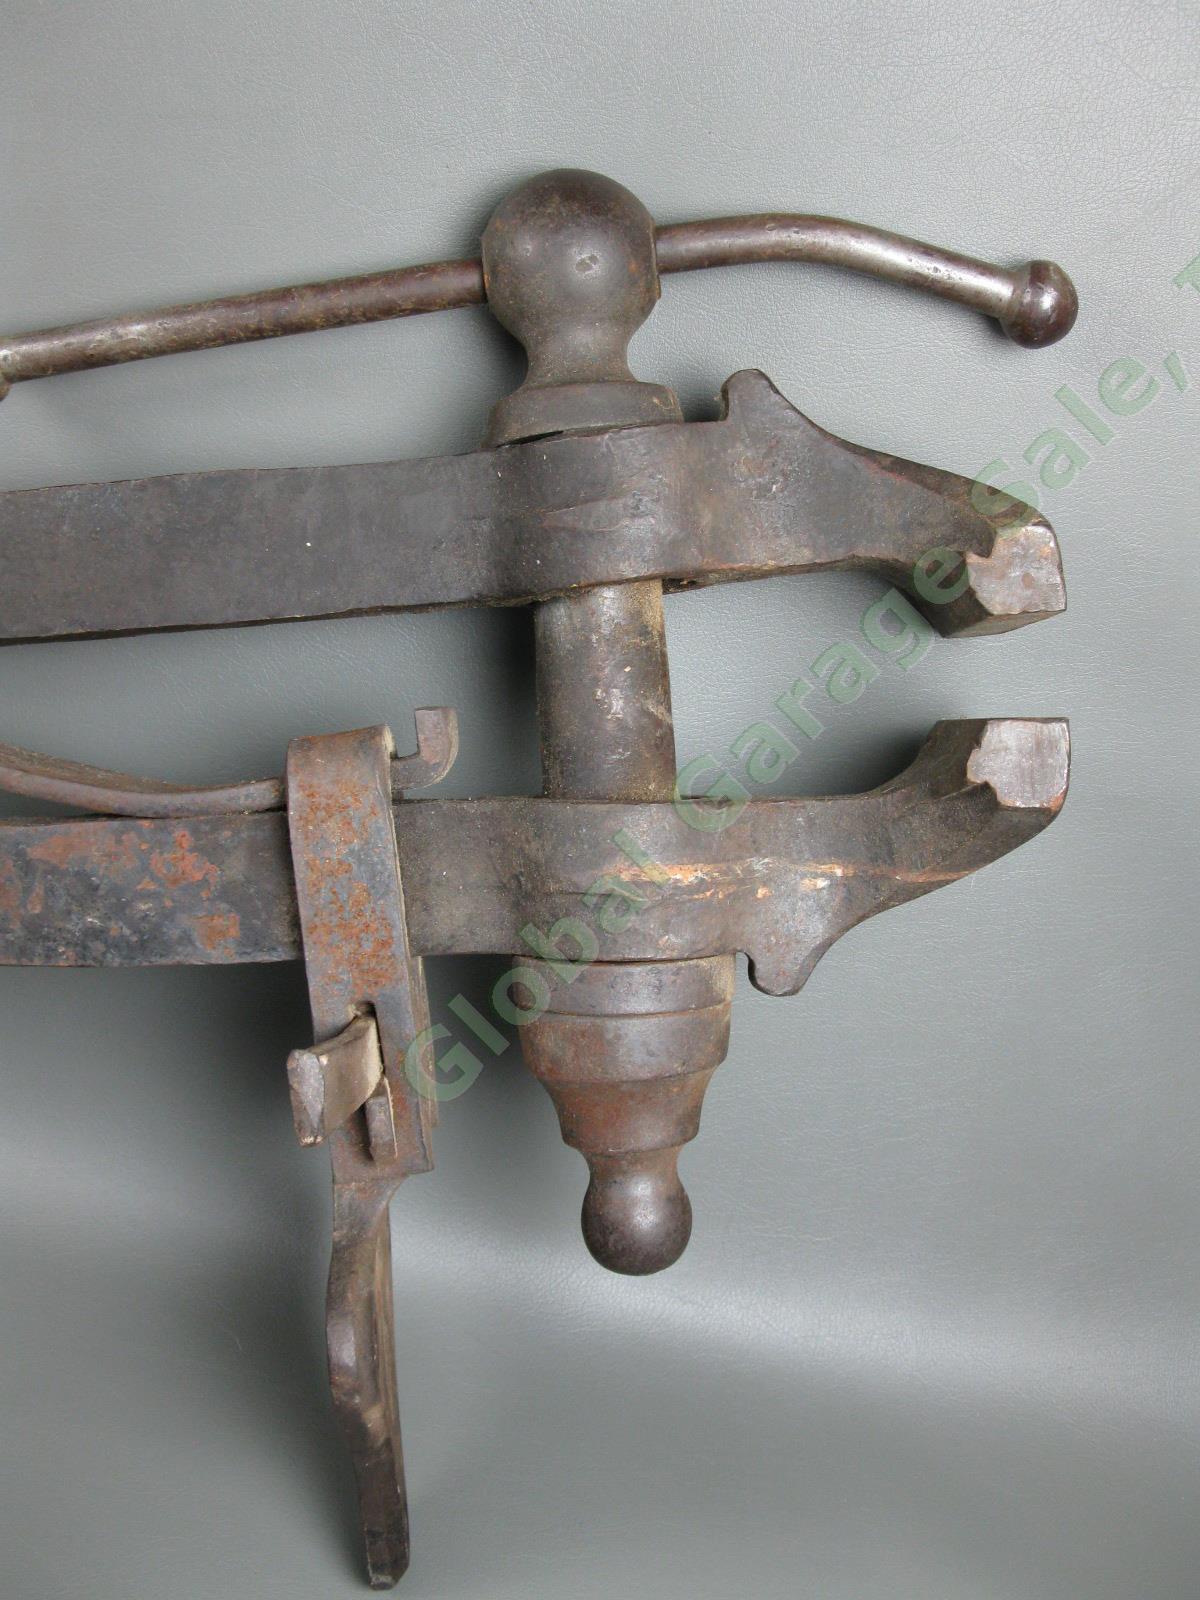 VTG Antique Blacksmith #2 Post Leg Vise 4 1/2" Jaw Clamp 53 lb Anvil Tool Forge 1